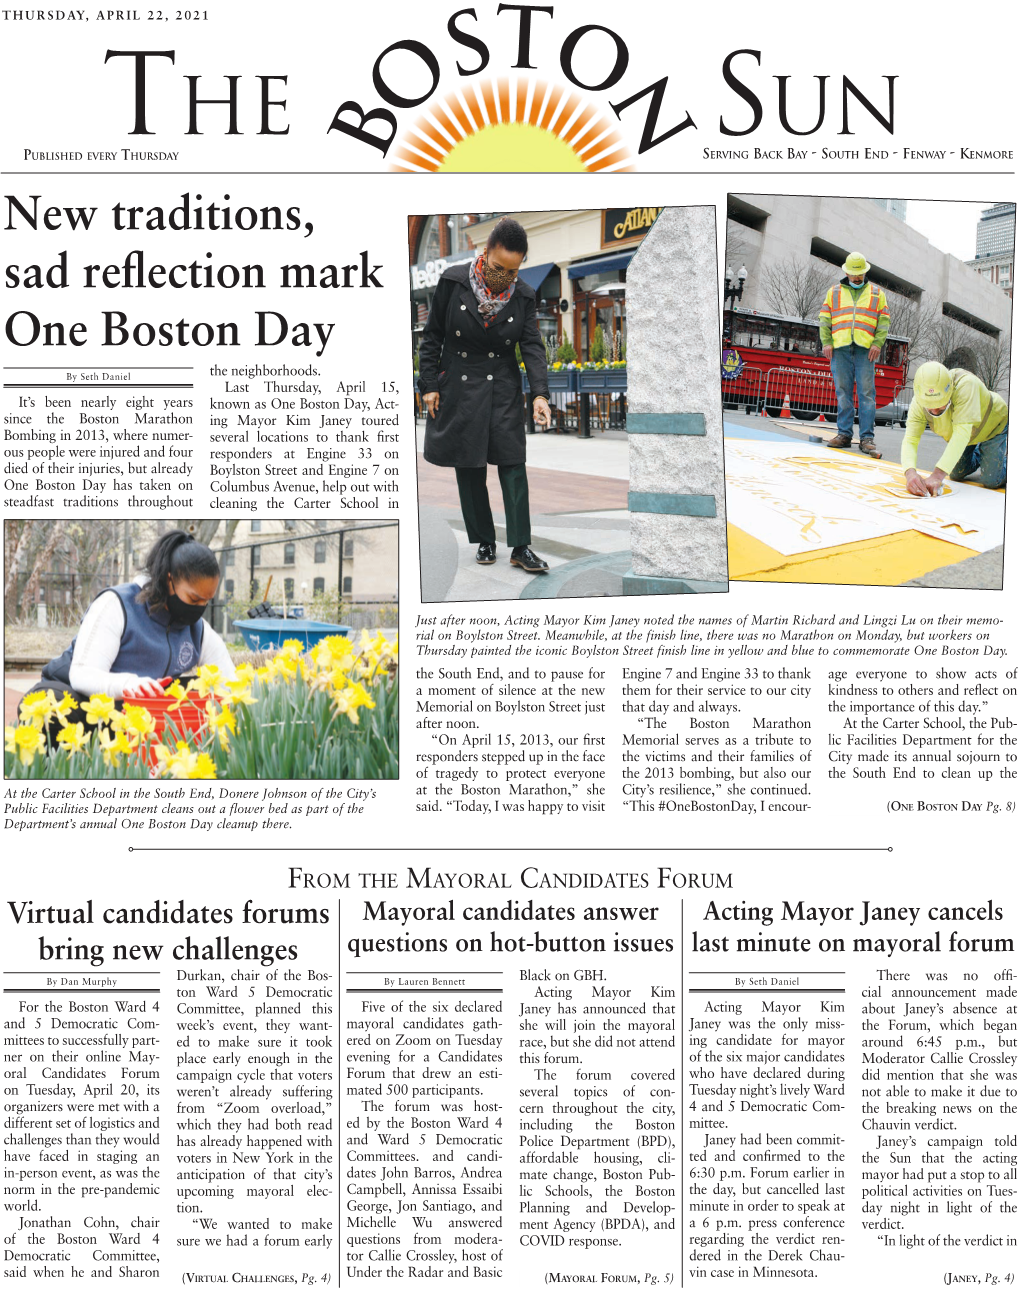 New Traditions, Sad Reflection Mark One Boston Day